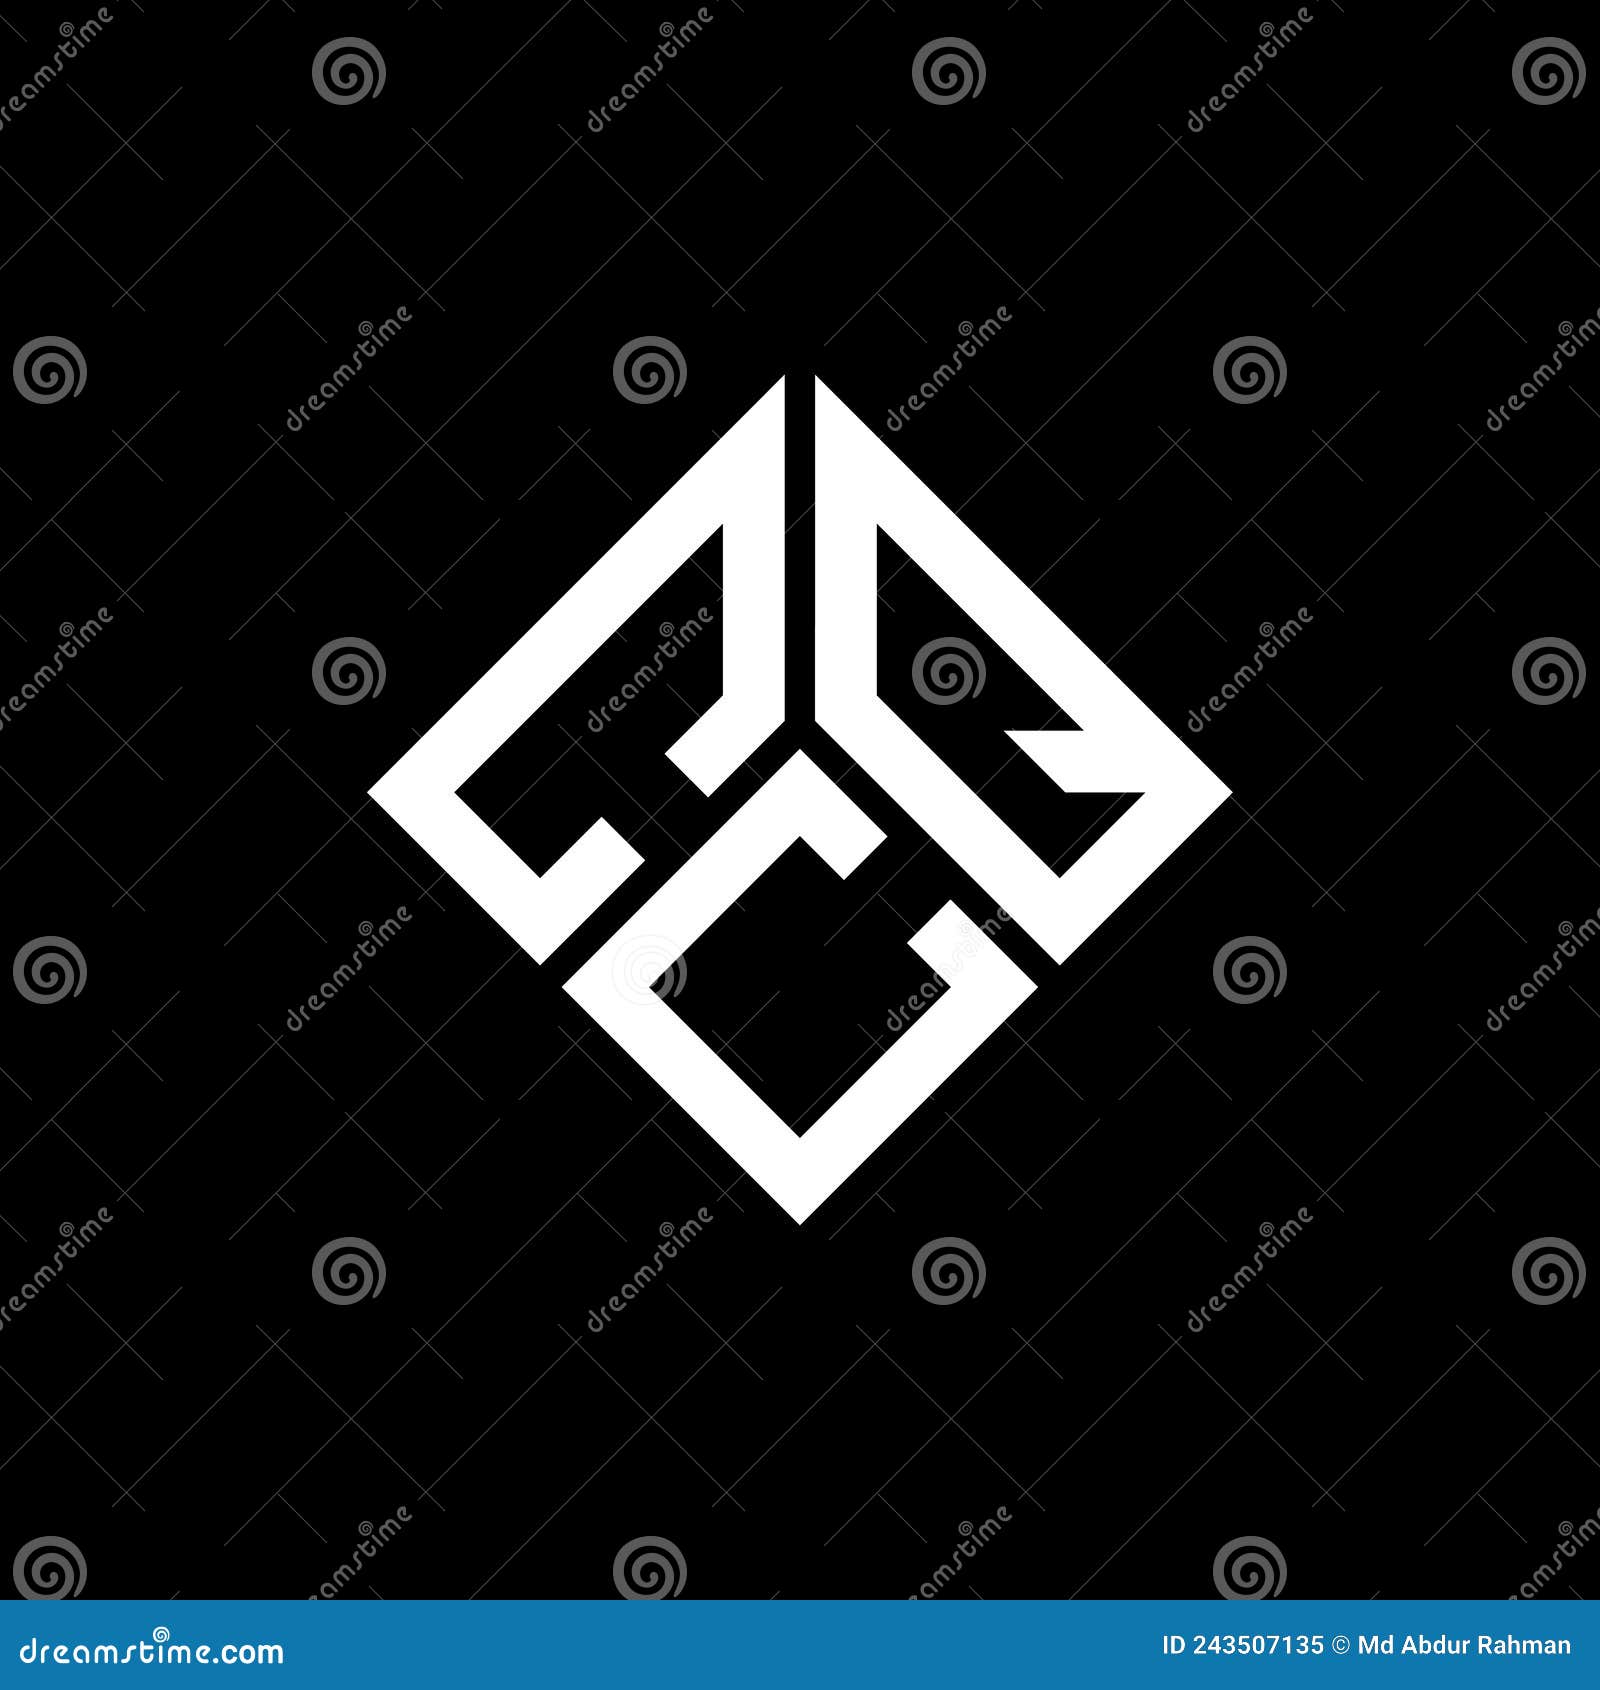 cqc letter logo  on black background. cqc creative initials letter logo concept. cqc letter 